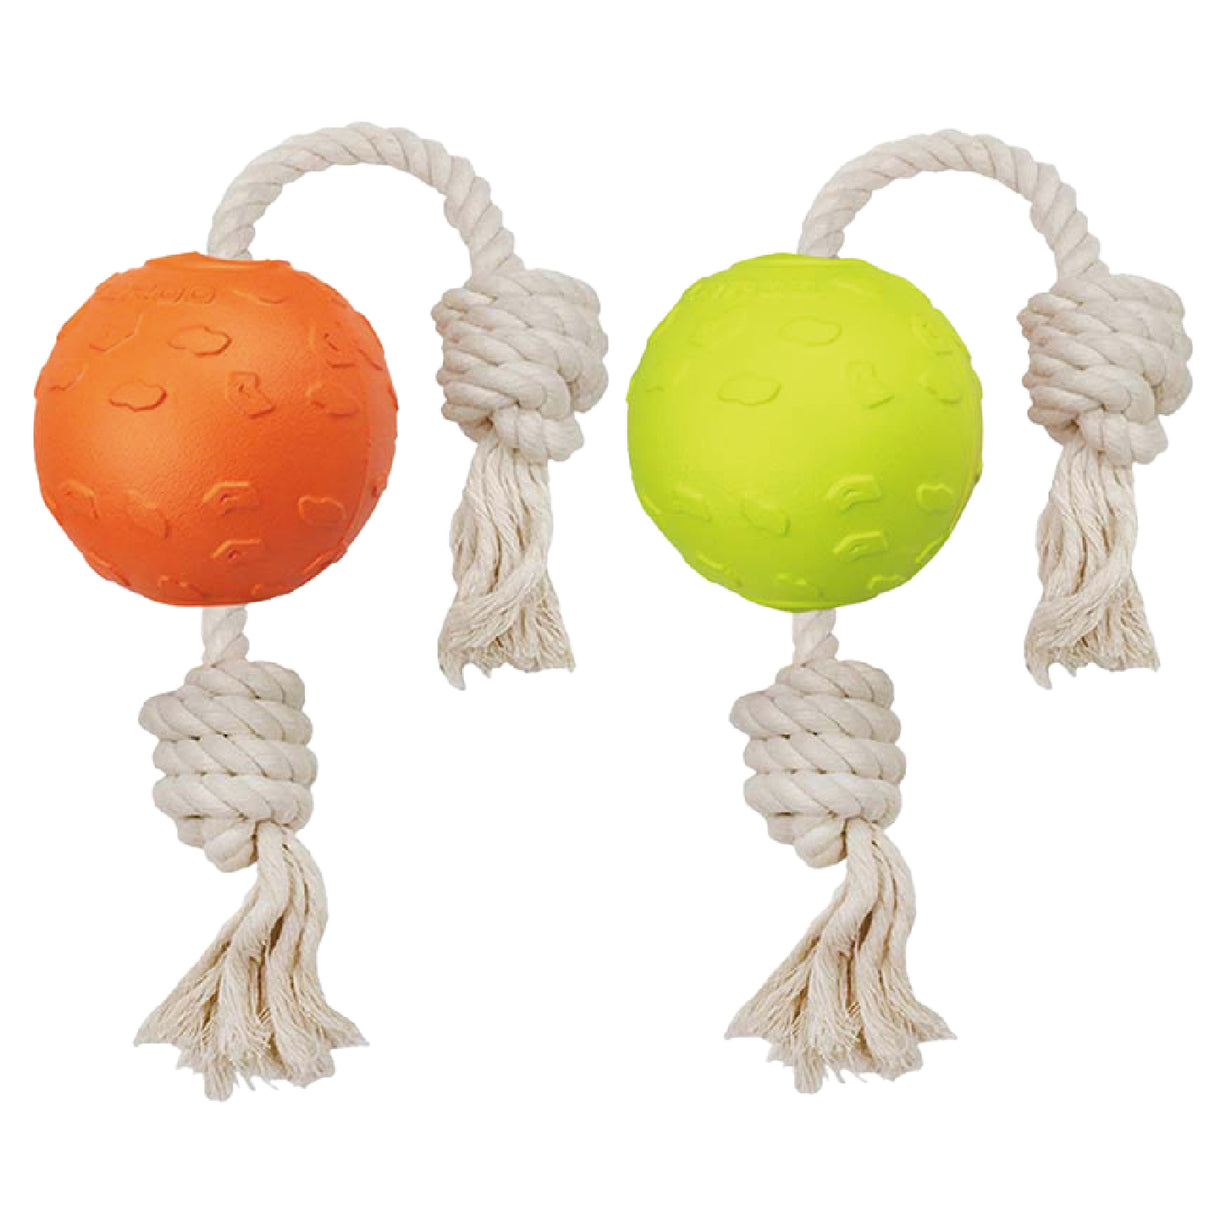 LaRoo萊諾 互動繩球 狗玩具 純棉互動玩具 拉扯耐咬玩具